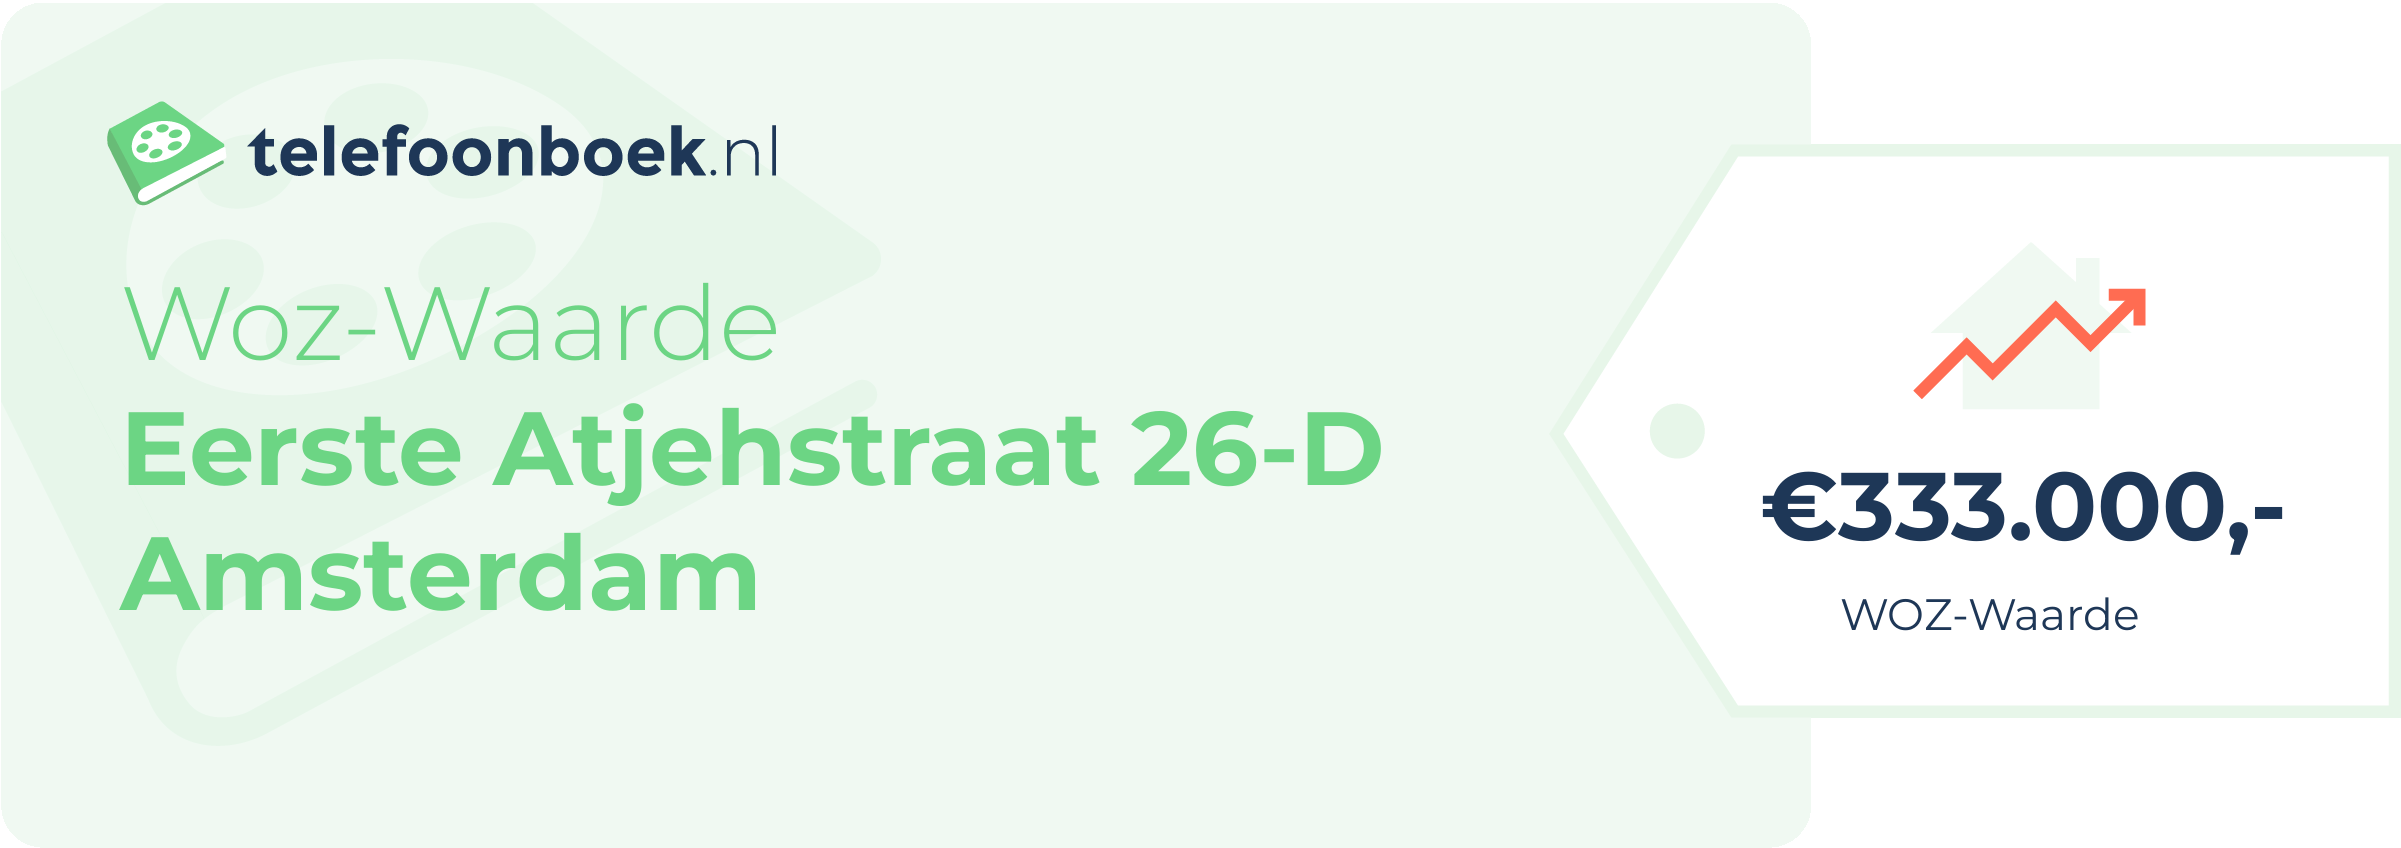 WOZ-waarde Eerste Atjehstraat 26-D Amsterdam